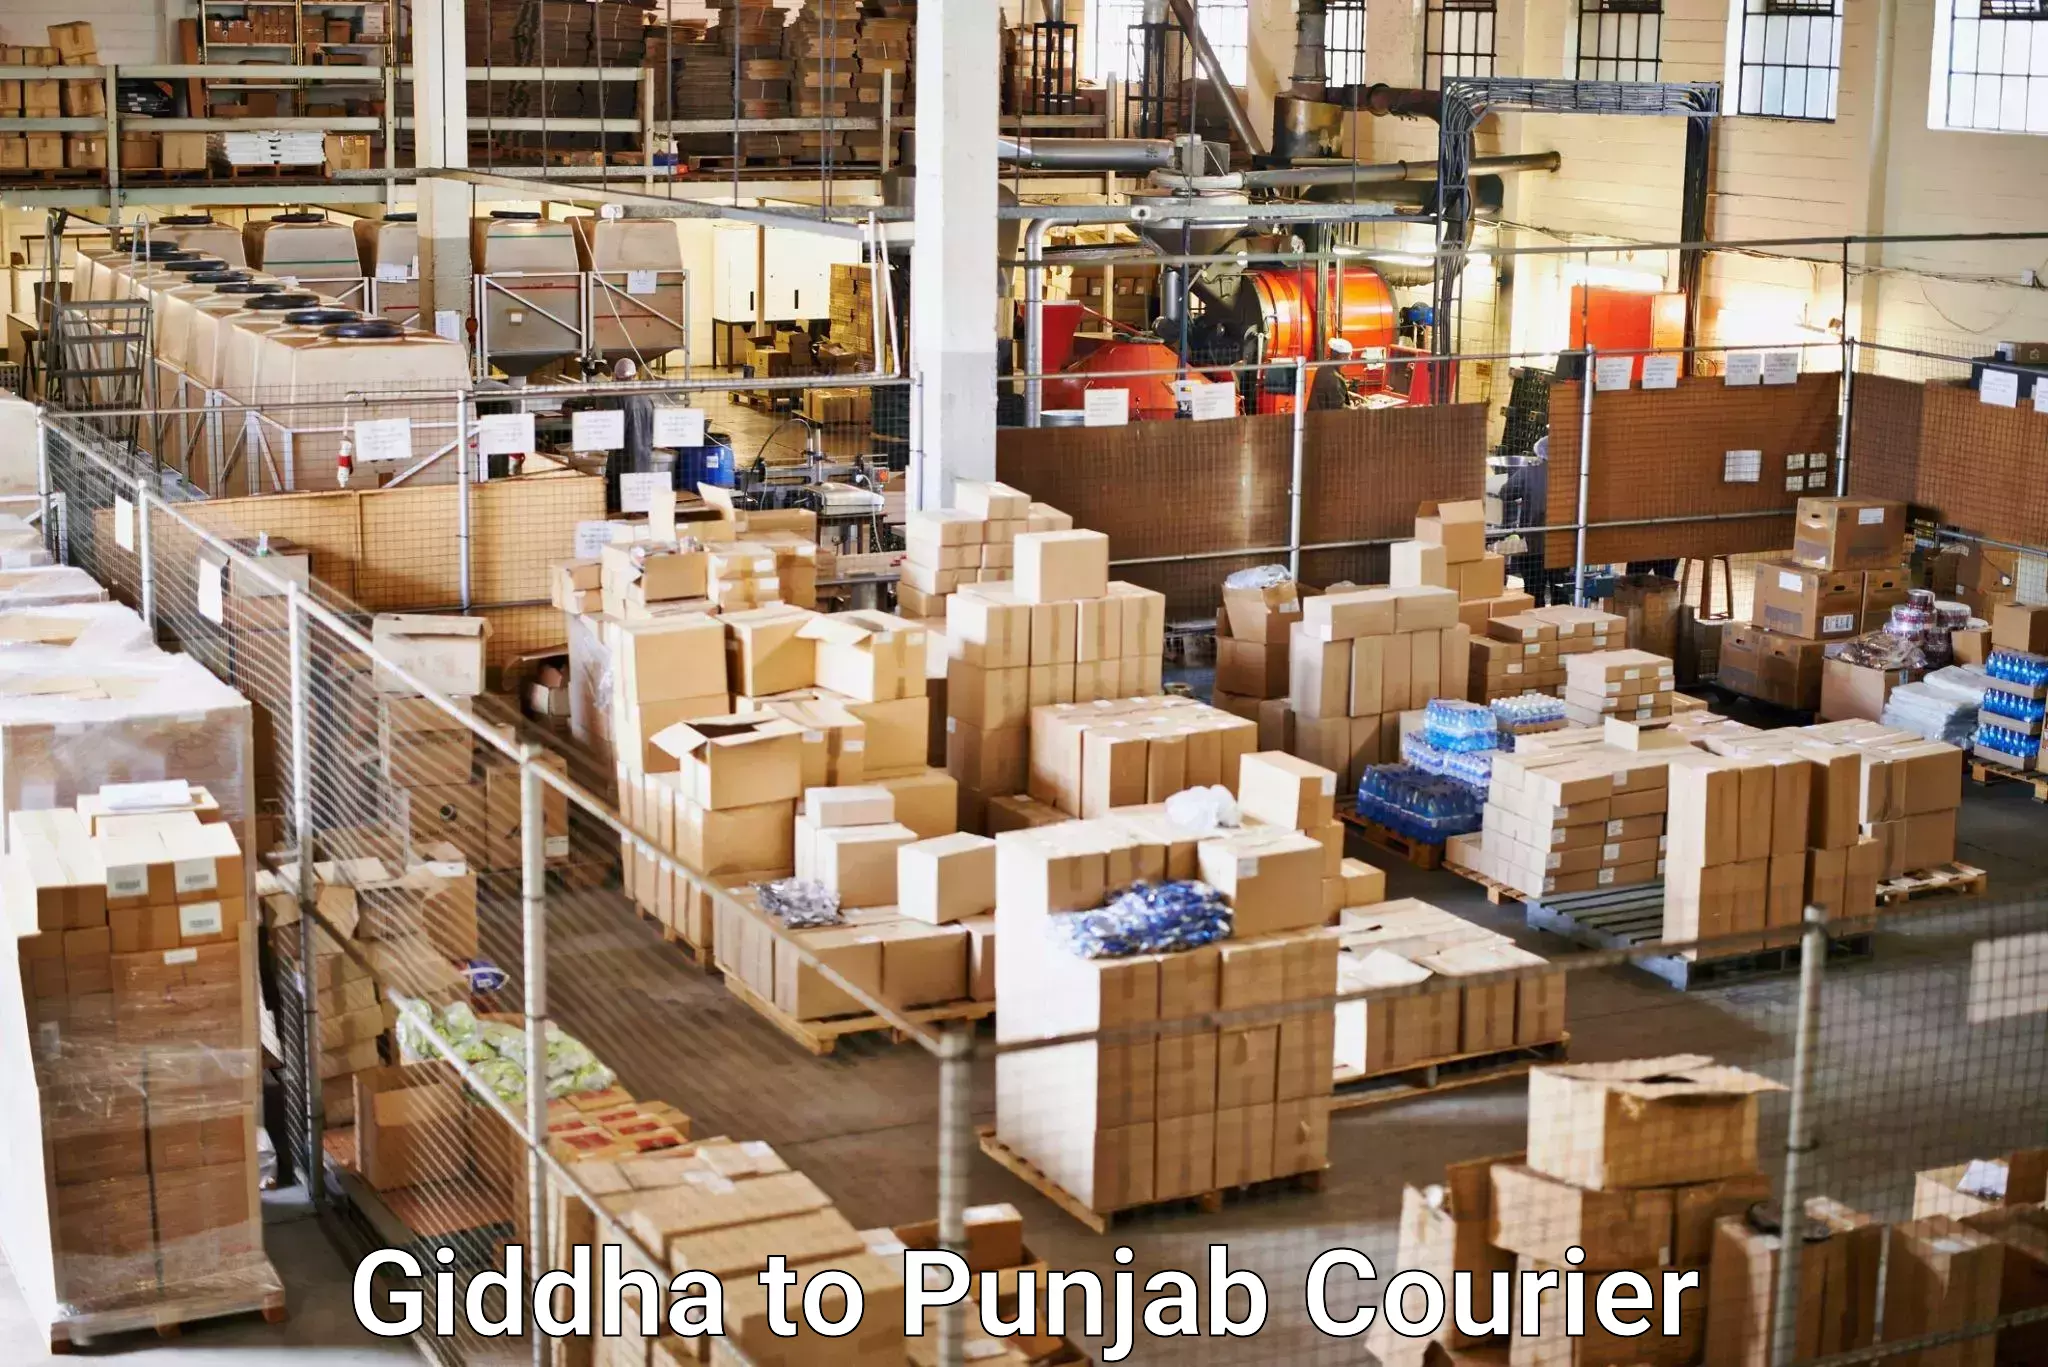 Courier service comparison Giddha to Tarsikka